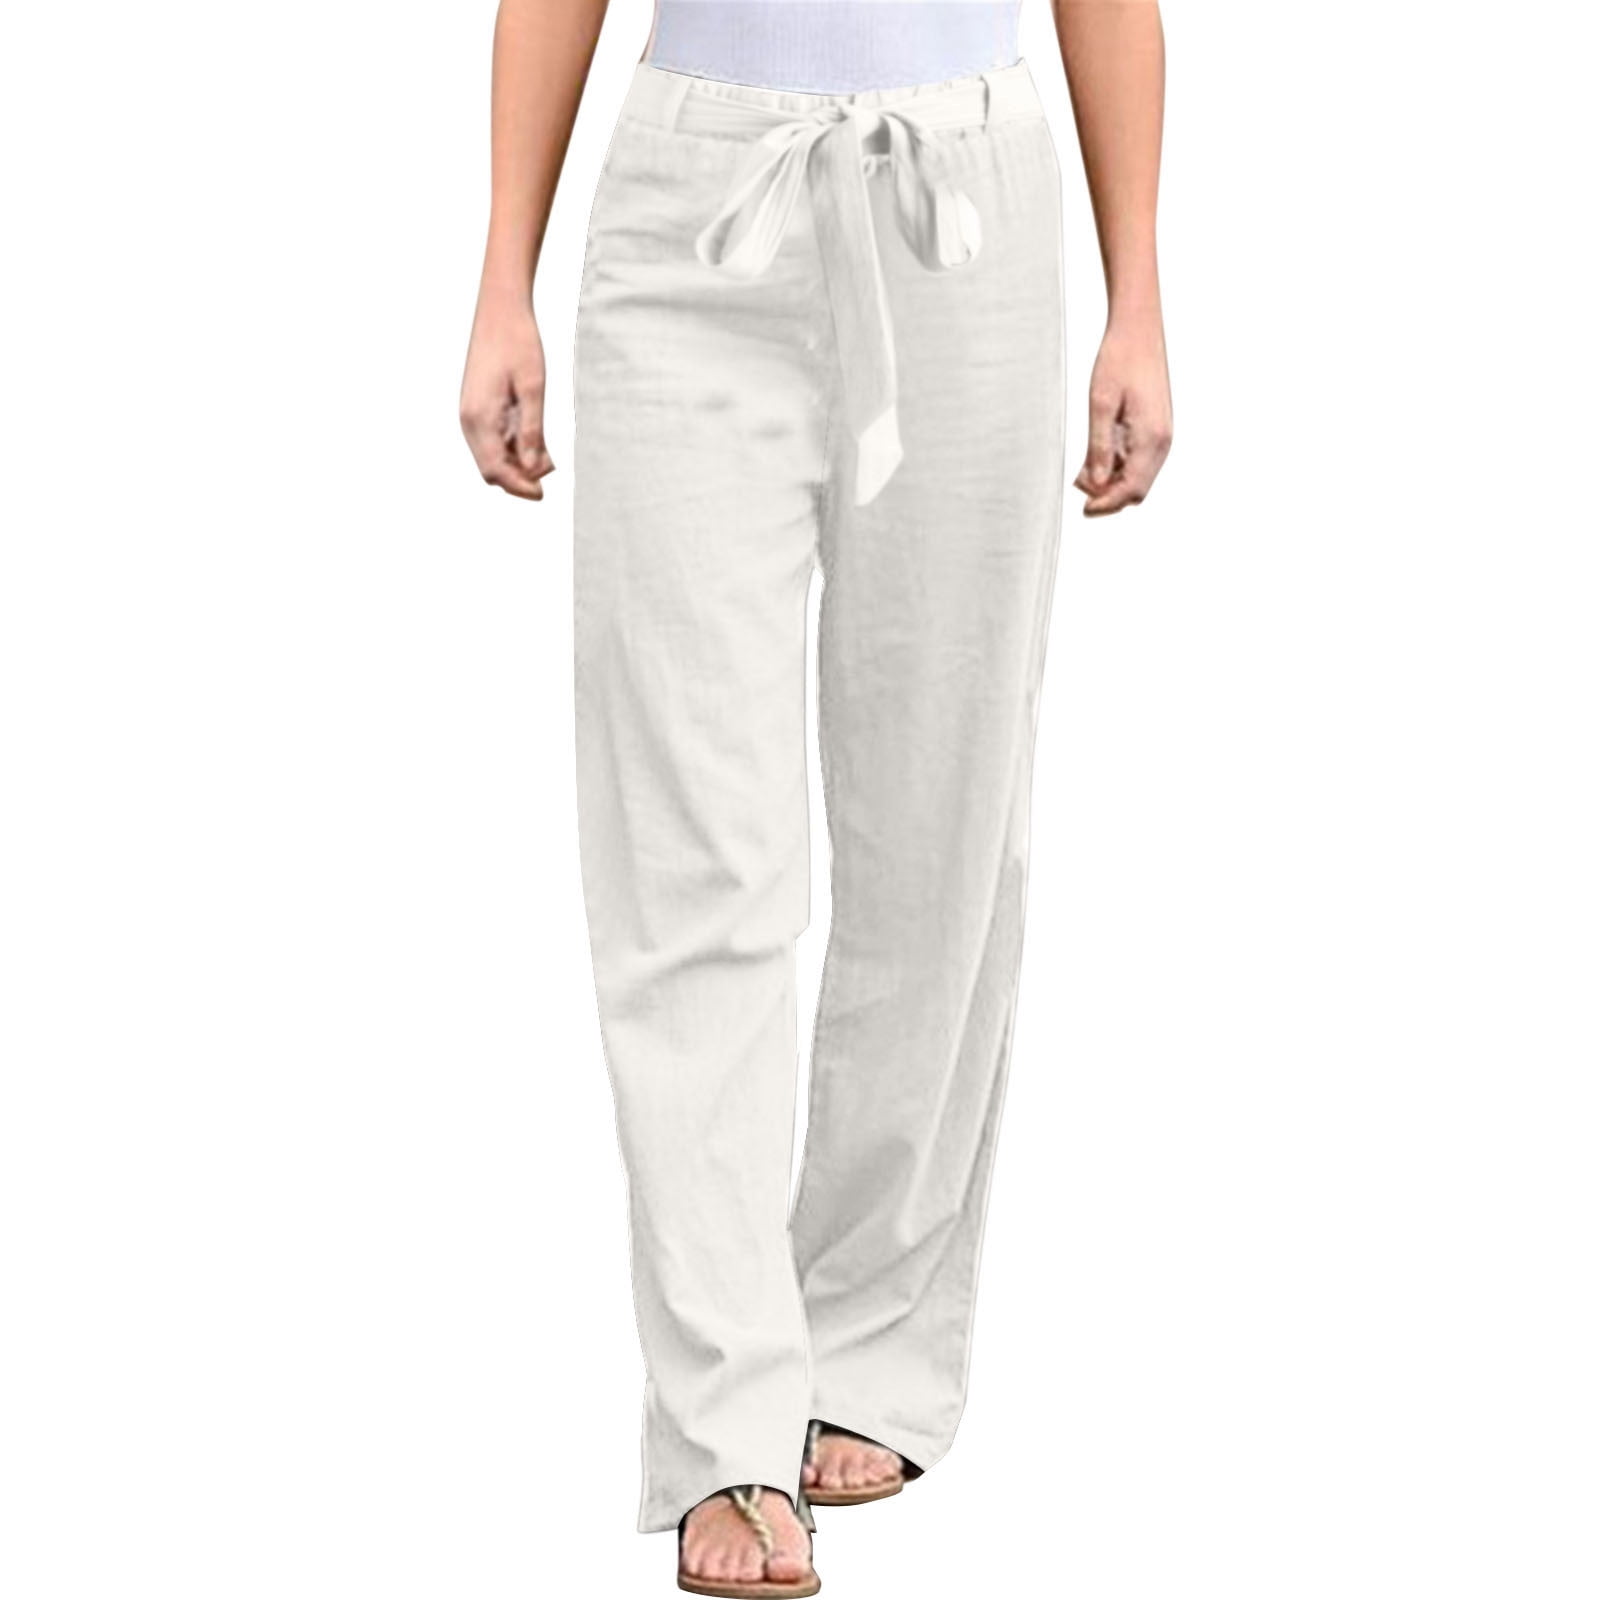 Buy Men's Drawstring Loose Linen Beach Pants Lightweight Elastic Waist Yoga  Lounge Cotton Trousers Pajamas, White, X-Large at Amazon.in